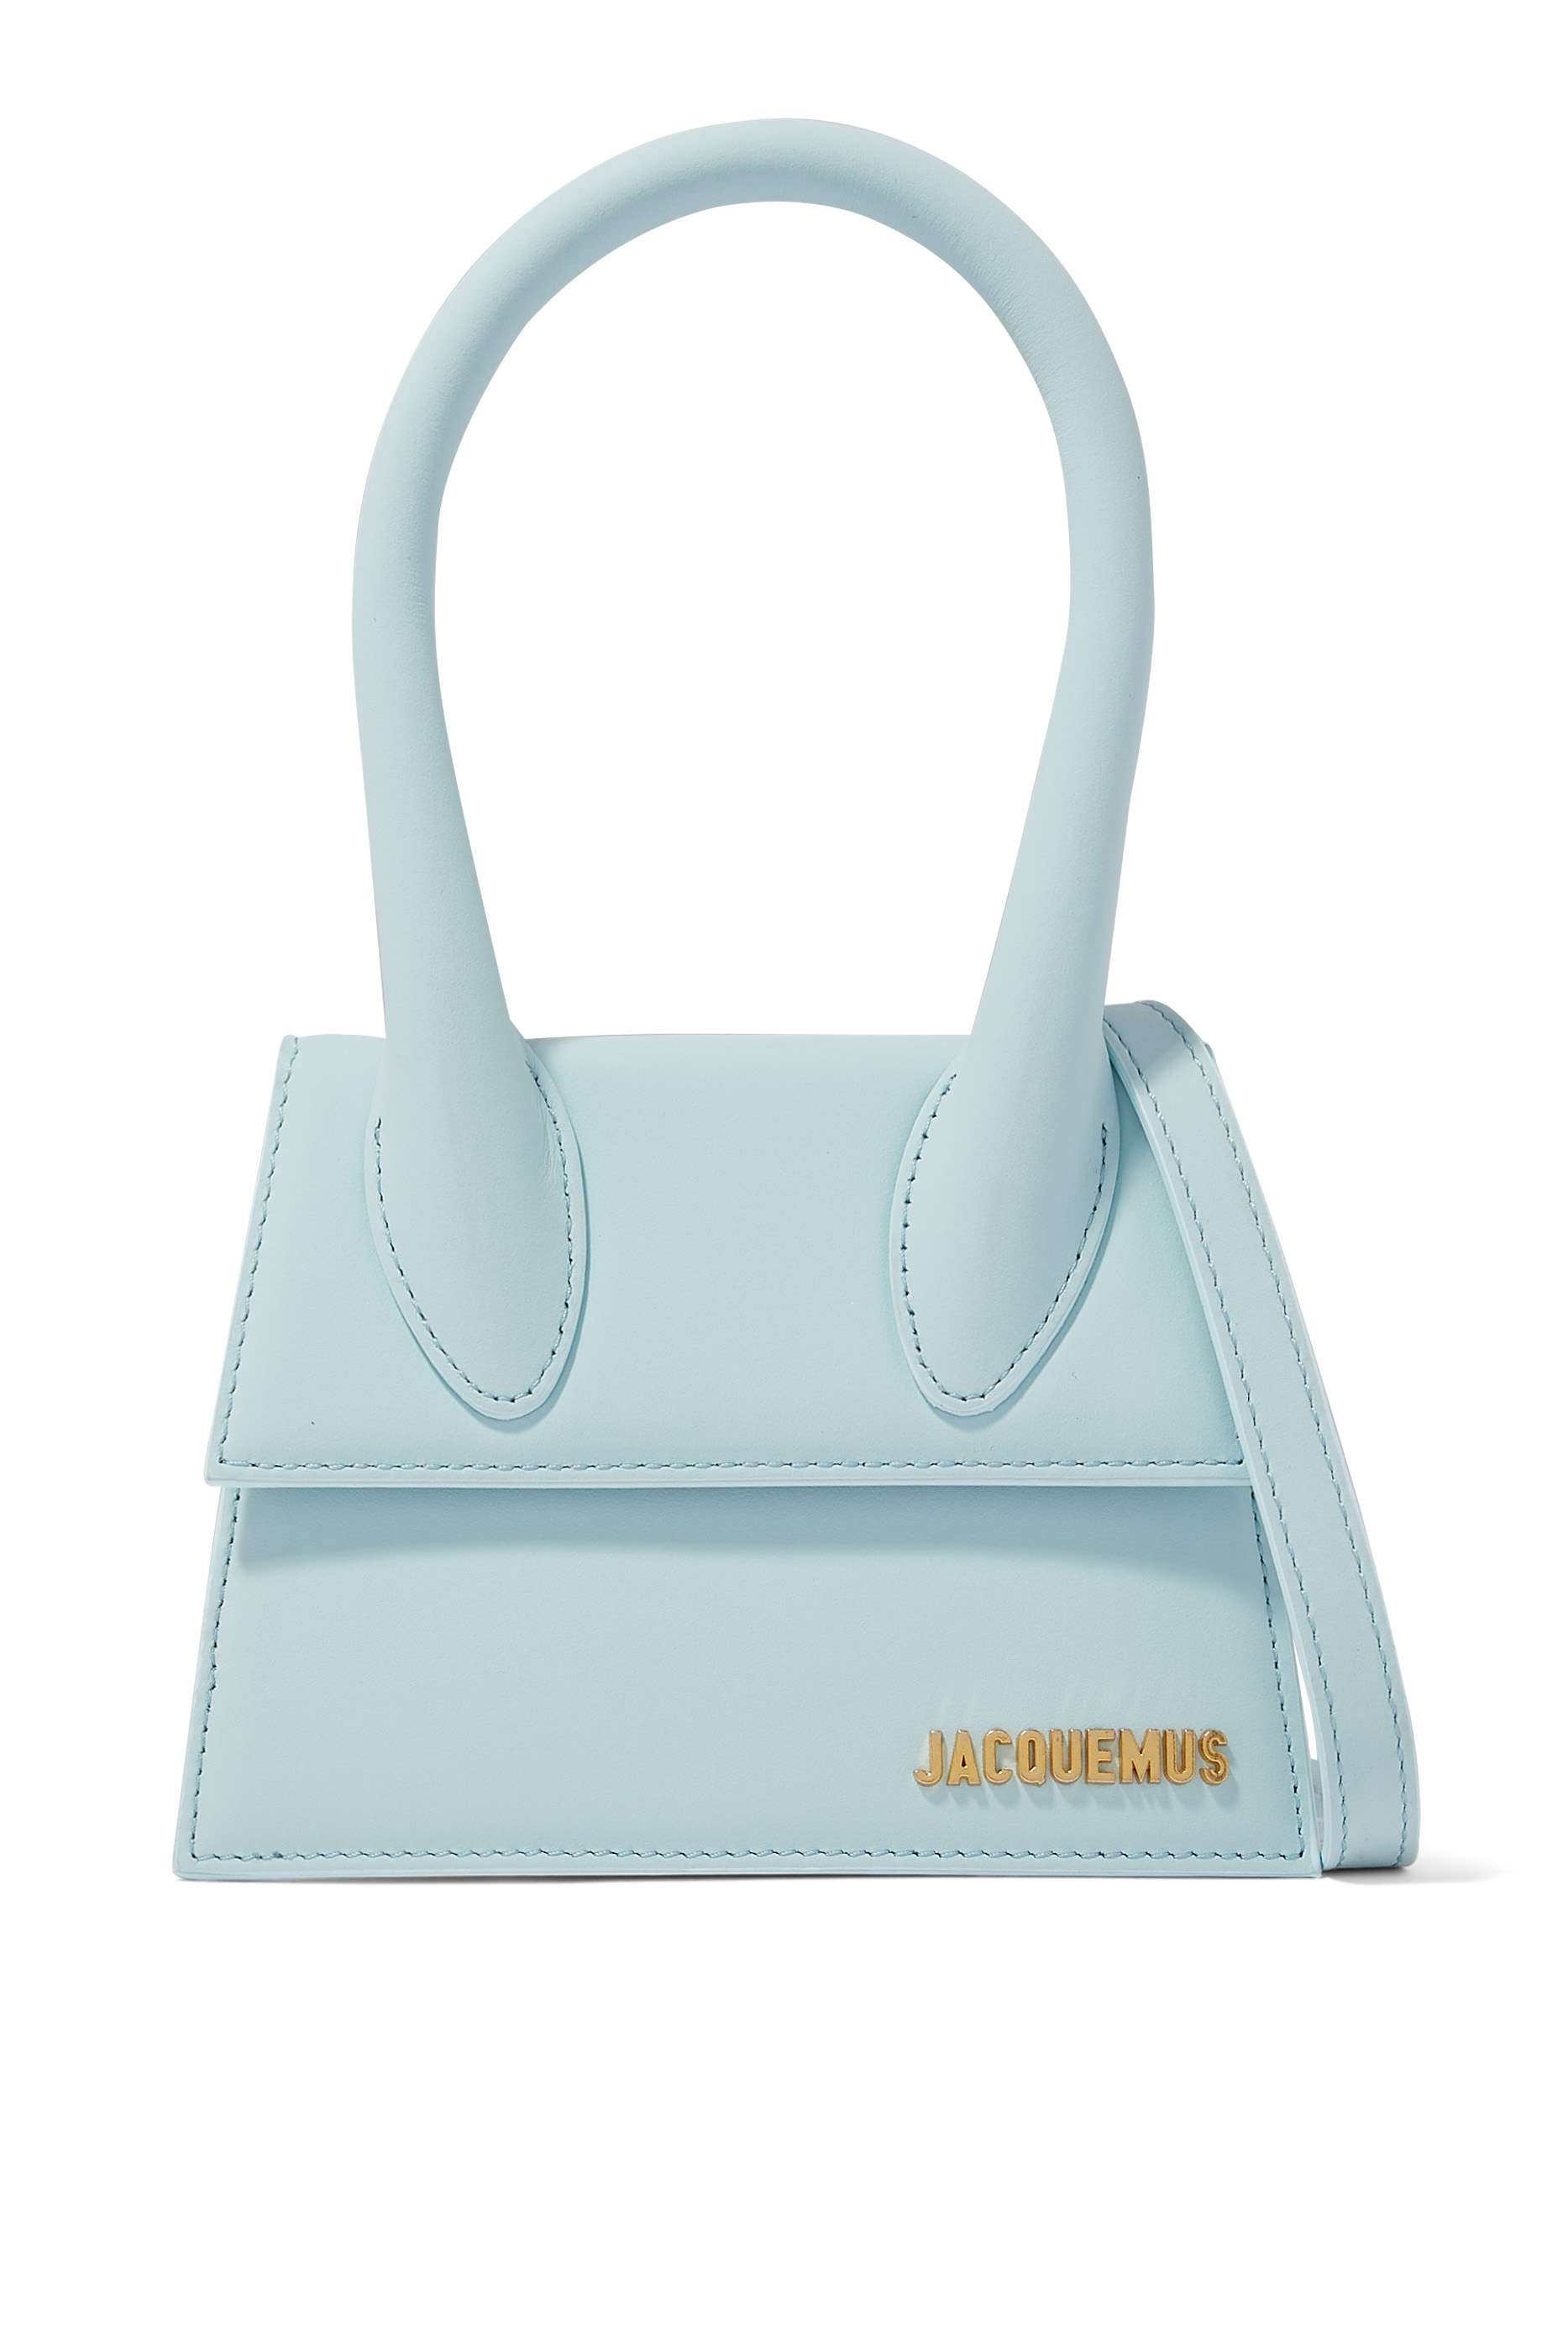 Buy Jacquemus Le Chiquito Moyen Bag for Womens | Bloomingdale's UAE